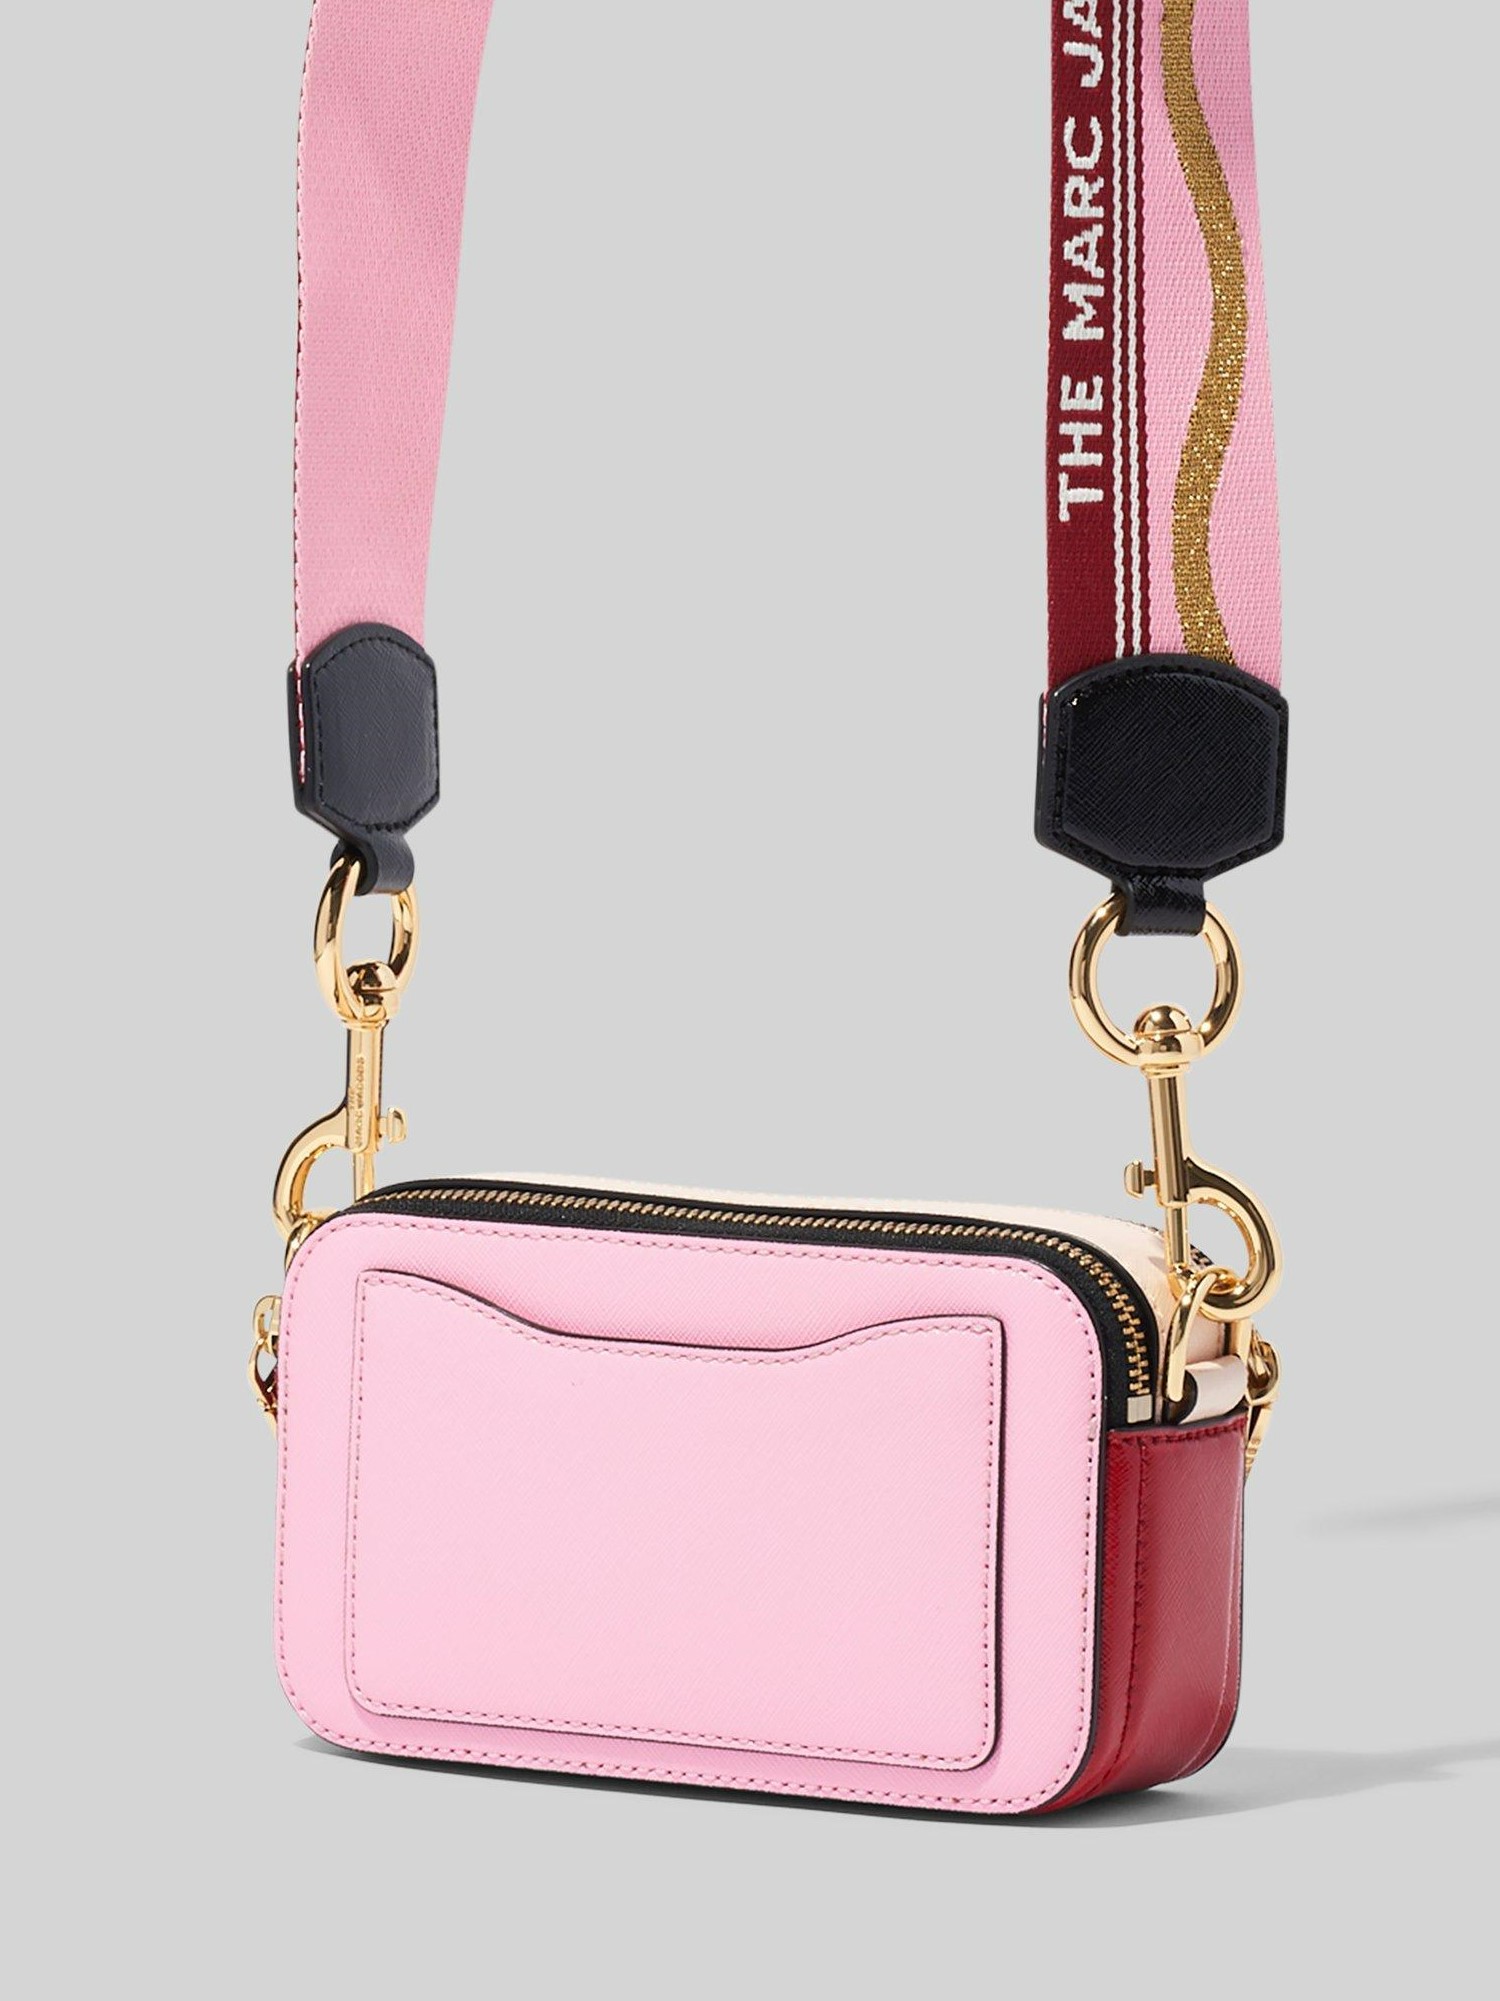 Túi xách nữ Marc Jacobs màu hồng | The Snapshot bag in New Baby Pink color 7